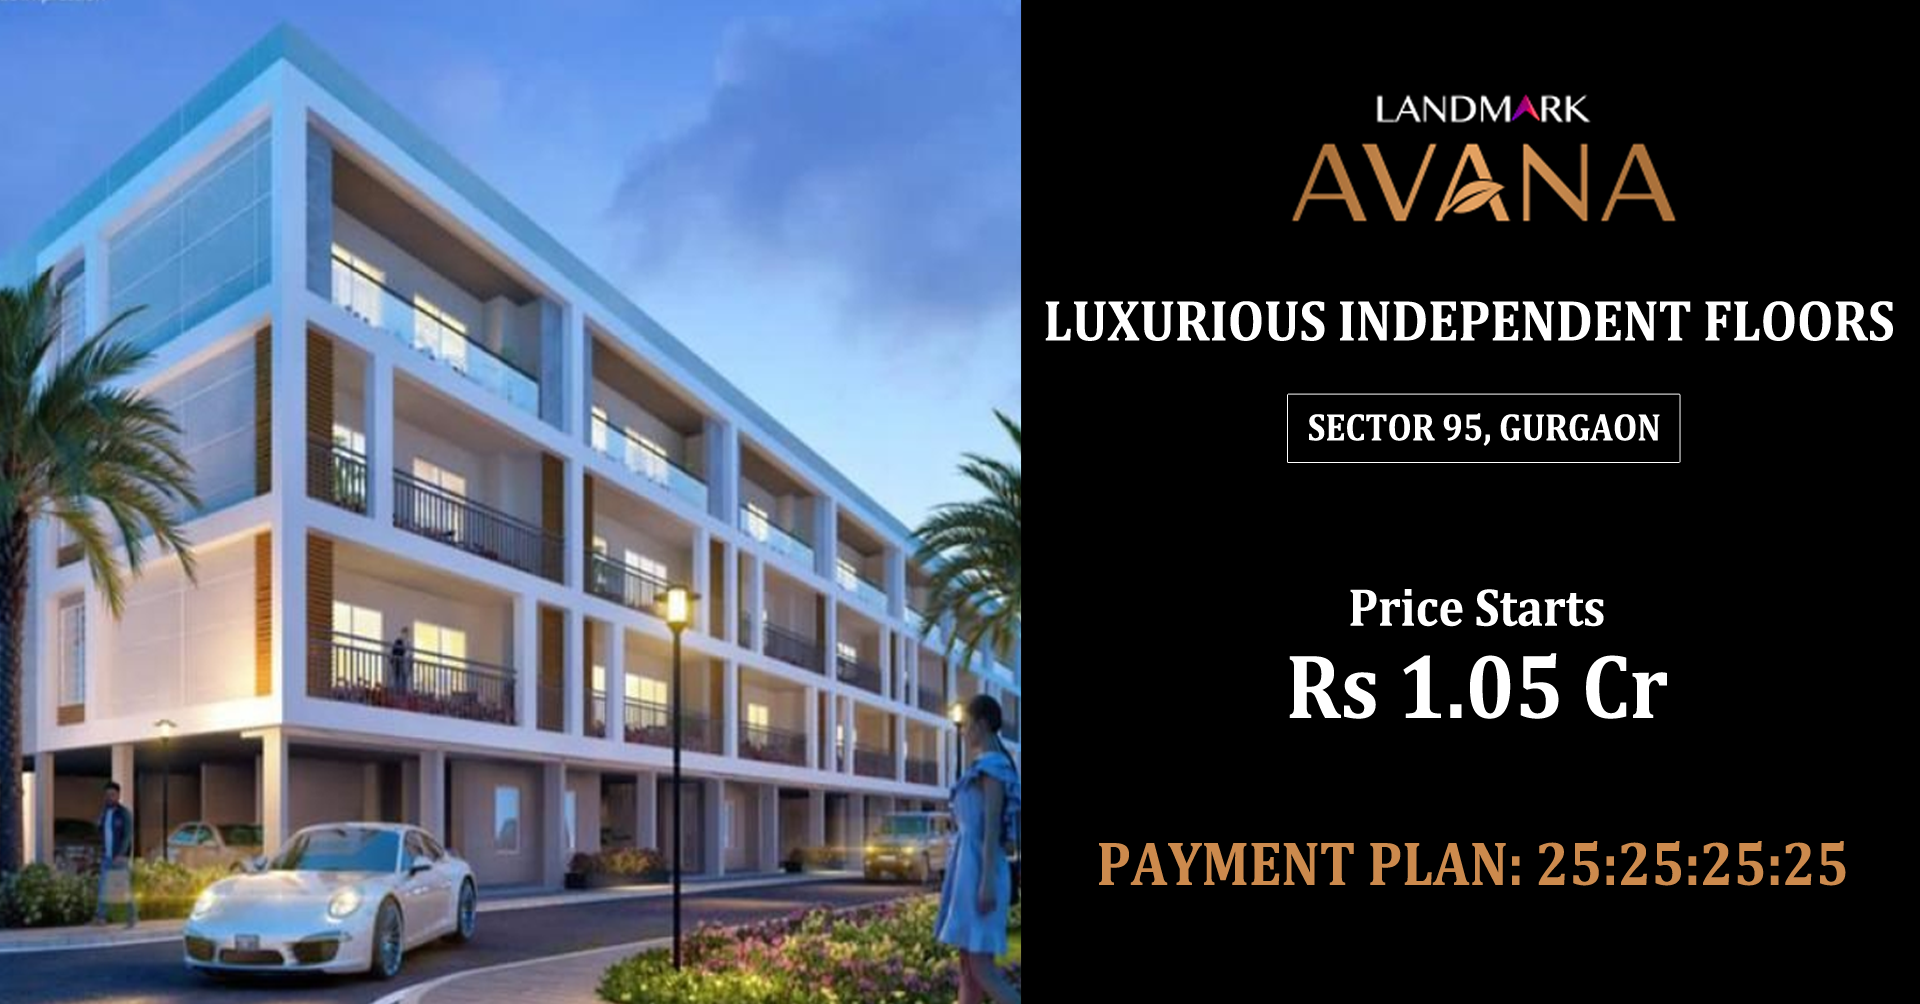 Book 3 BHK Luxury low rise floors starting price Rs. 1.05 Cr at Landmark Avana, Gurgaon